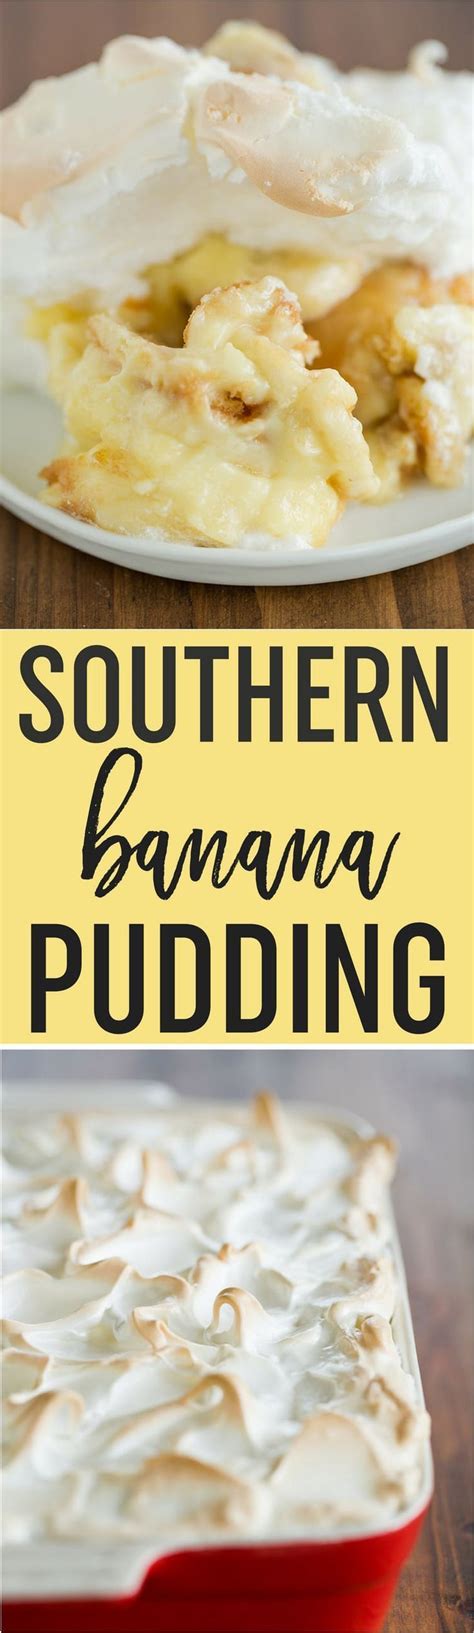 Southern Banana Pudding That Will Make Grandma Proud Recipe Southern Banana Pudding Banana